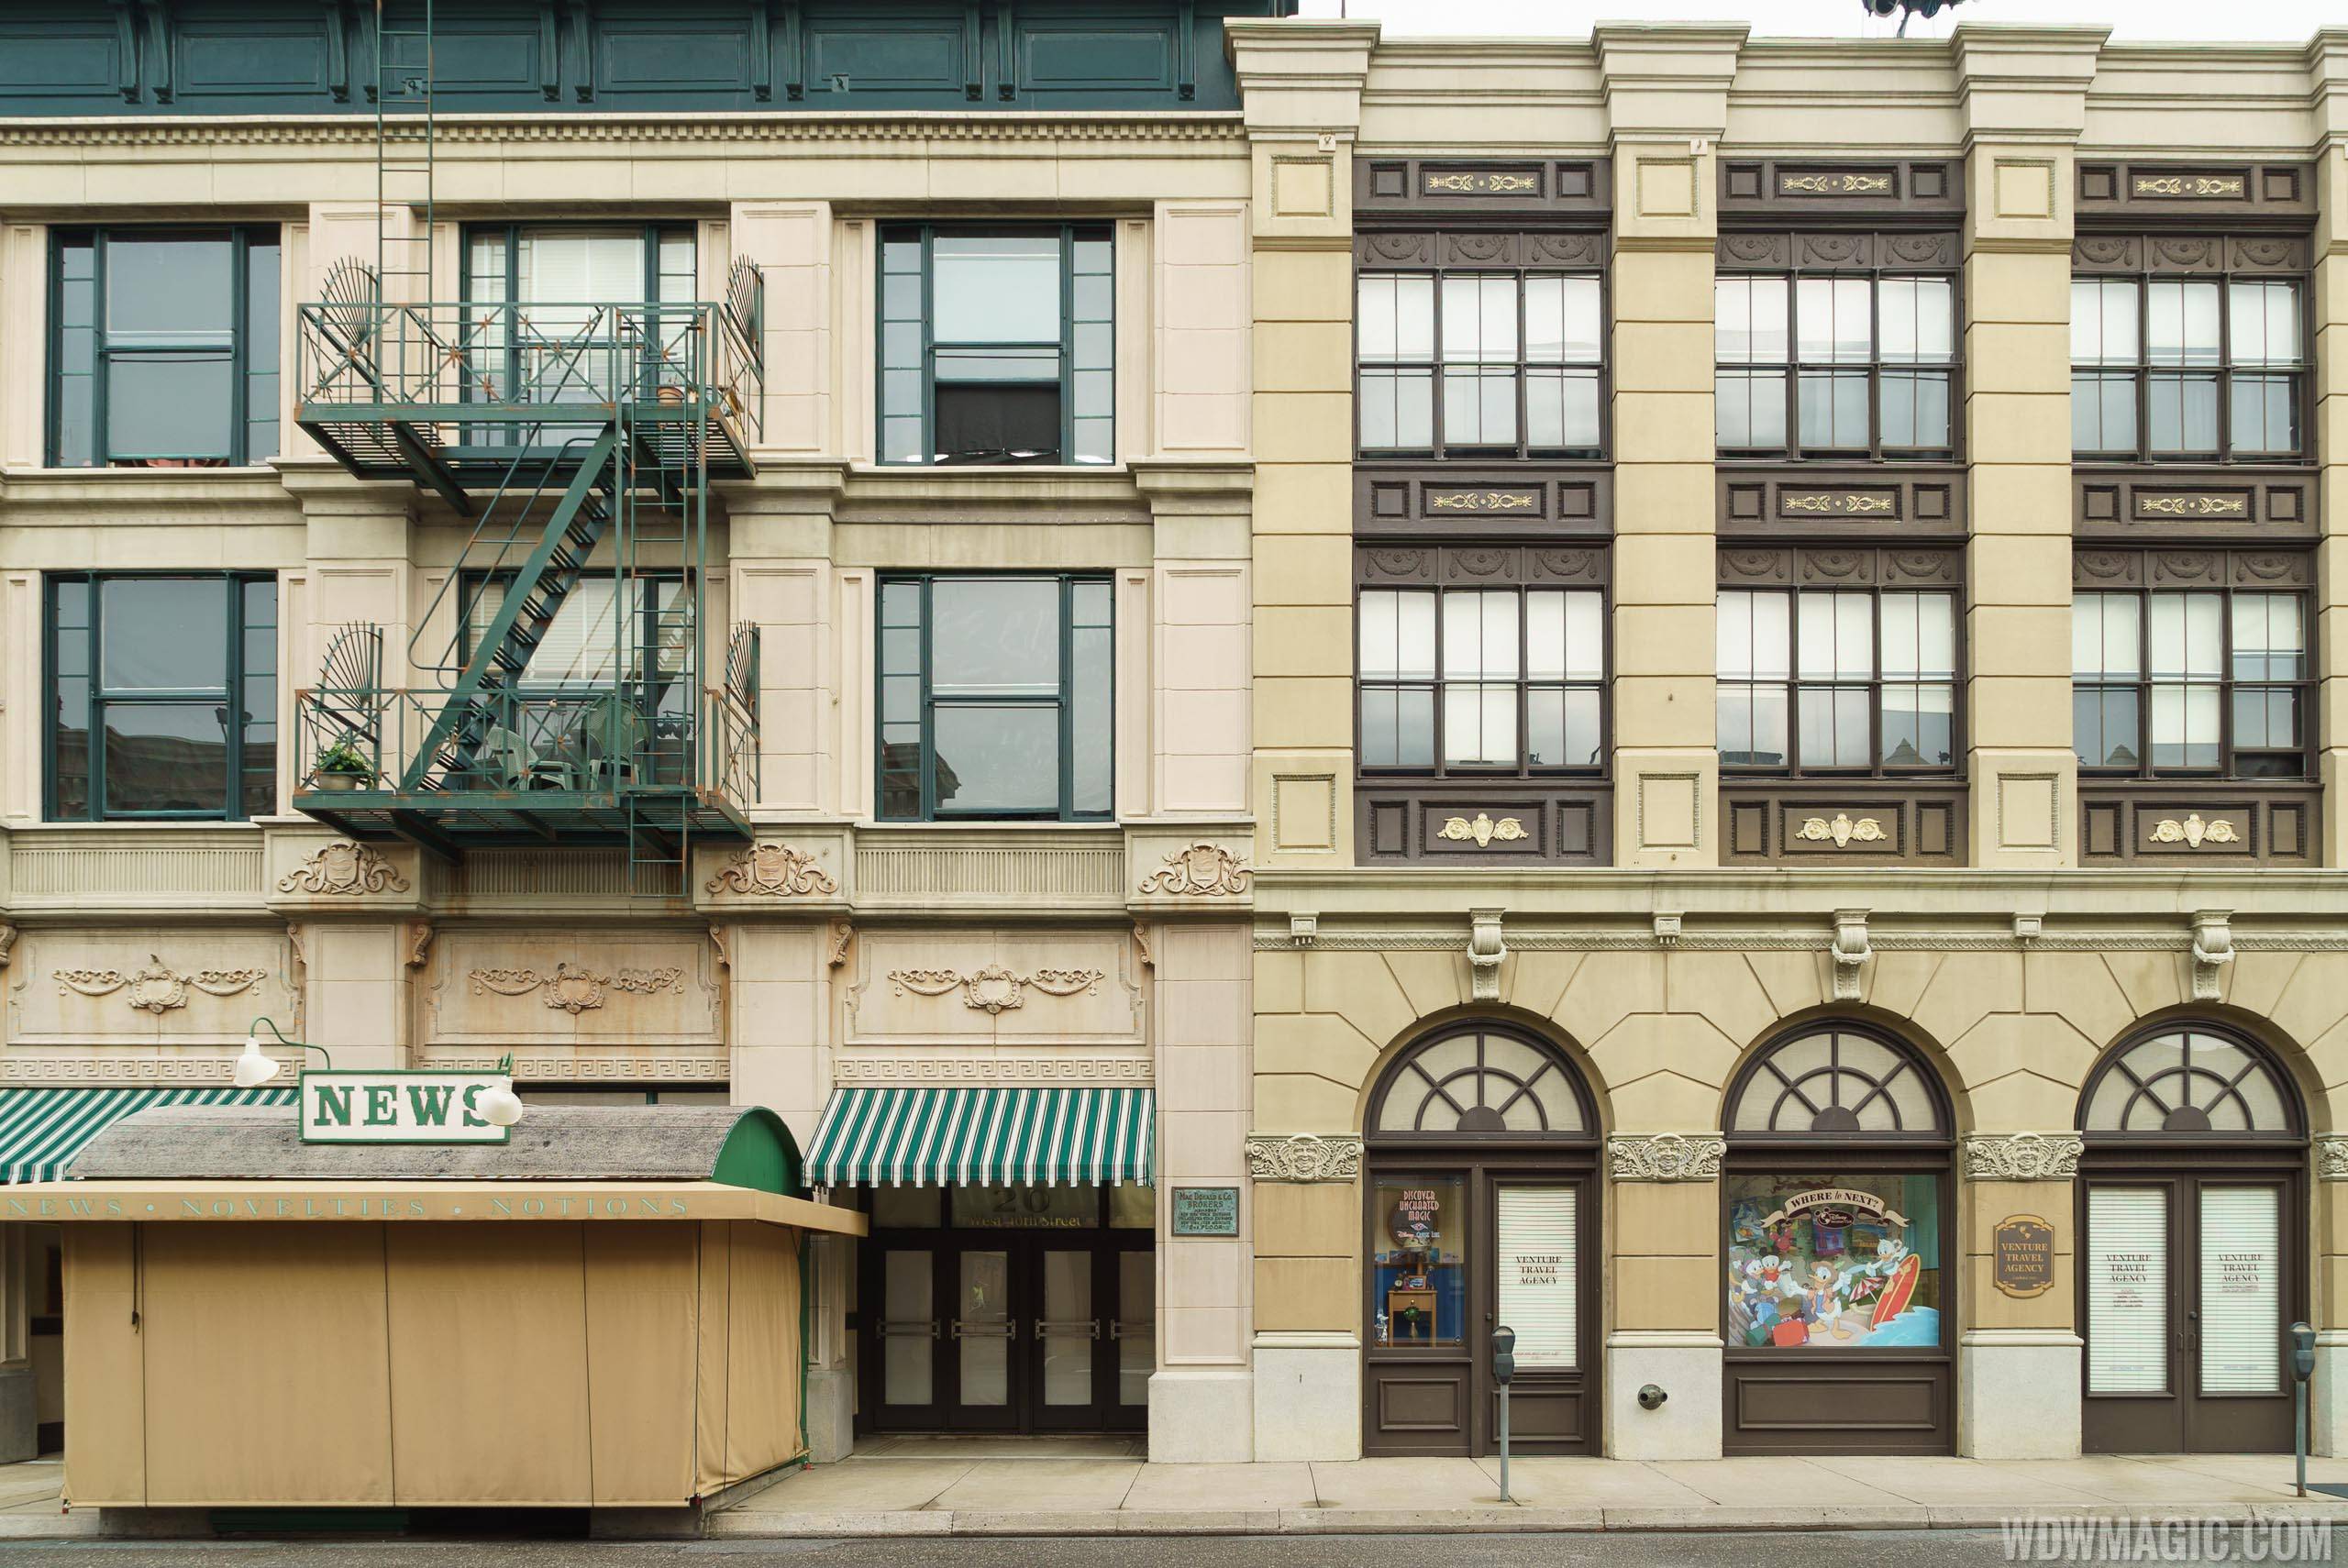 Streets of America facades - New York Venture Travel Agency